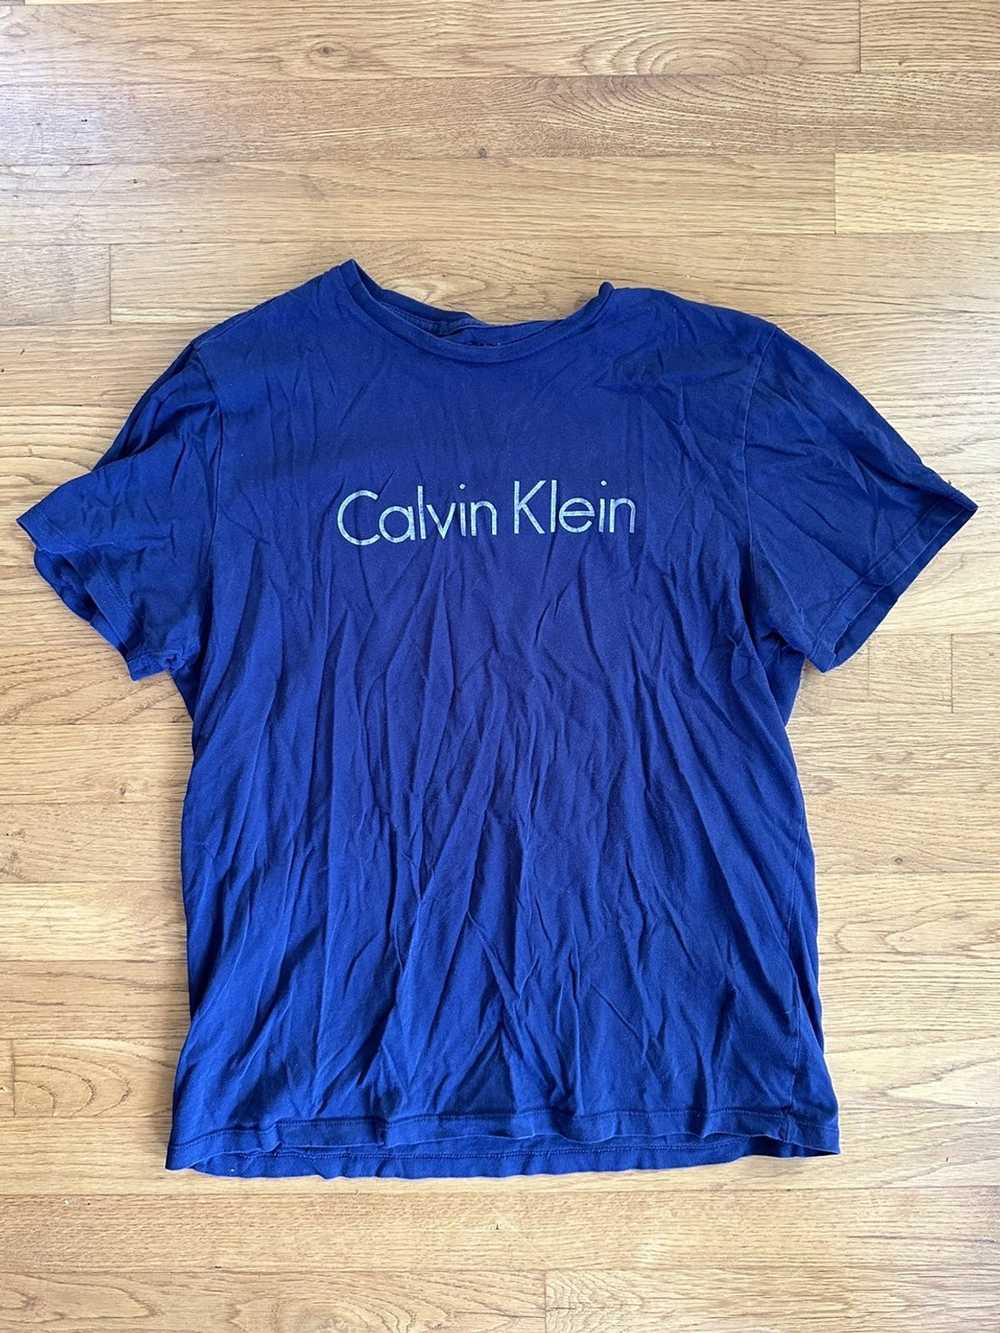 Calvin Klein × Vintage Vintage Calvin Klein Tee - image 1